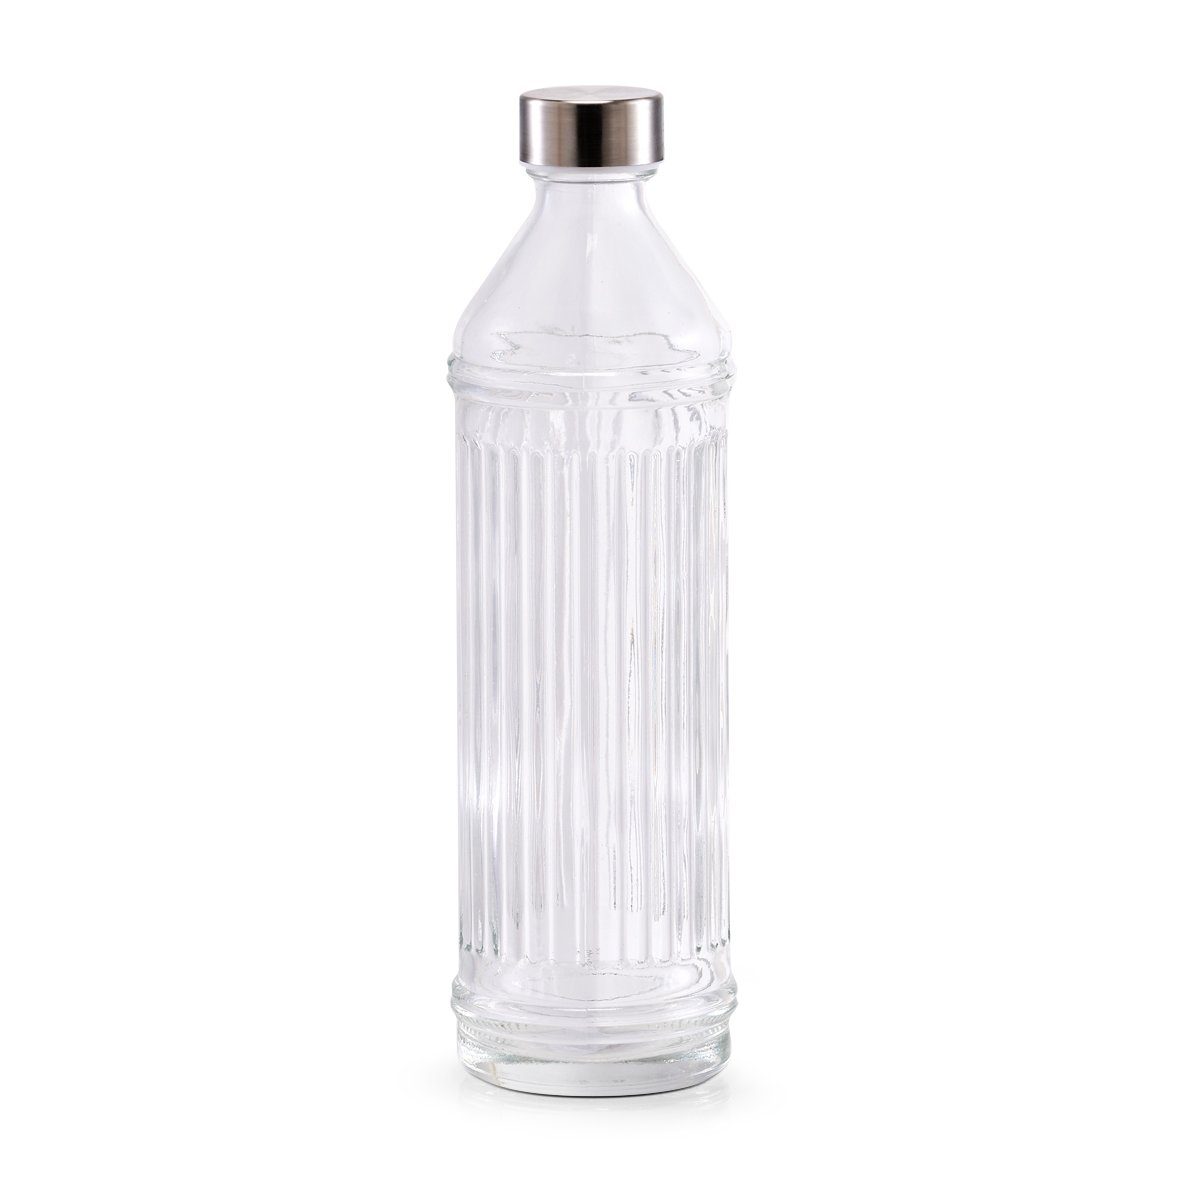 Zeller Present Trinkflasche Glasflasche, 970 ml, Glas (soda lime glass)  /Edelstahl, transparent, Ø8,5 x 30 cm